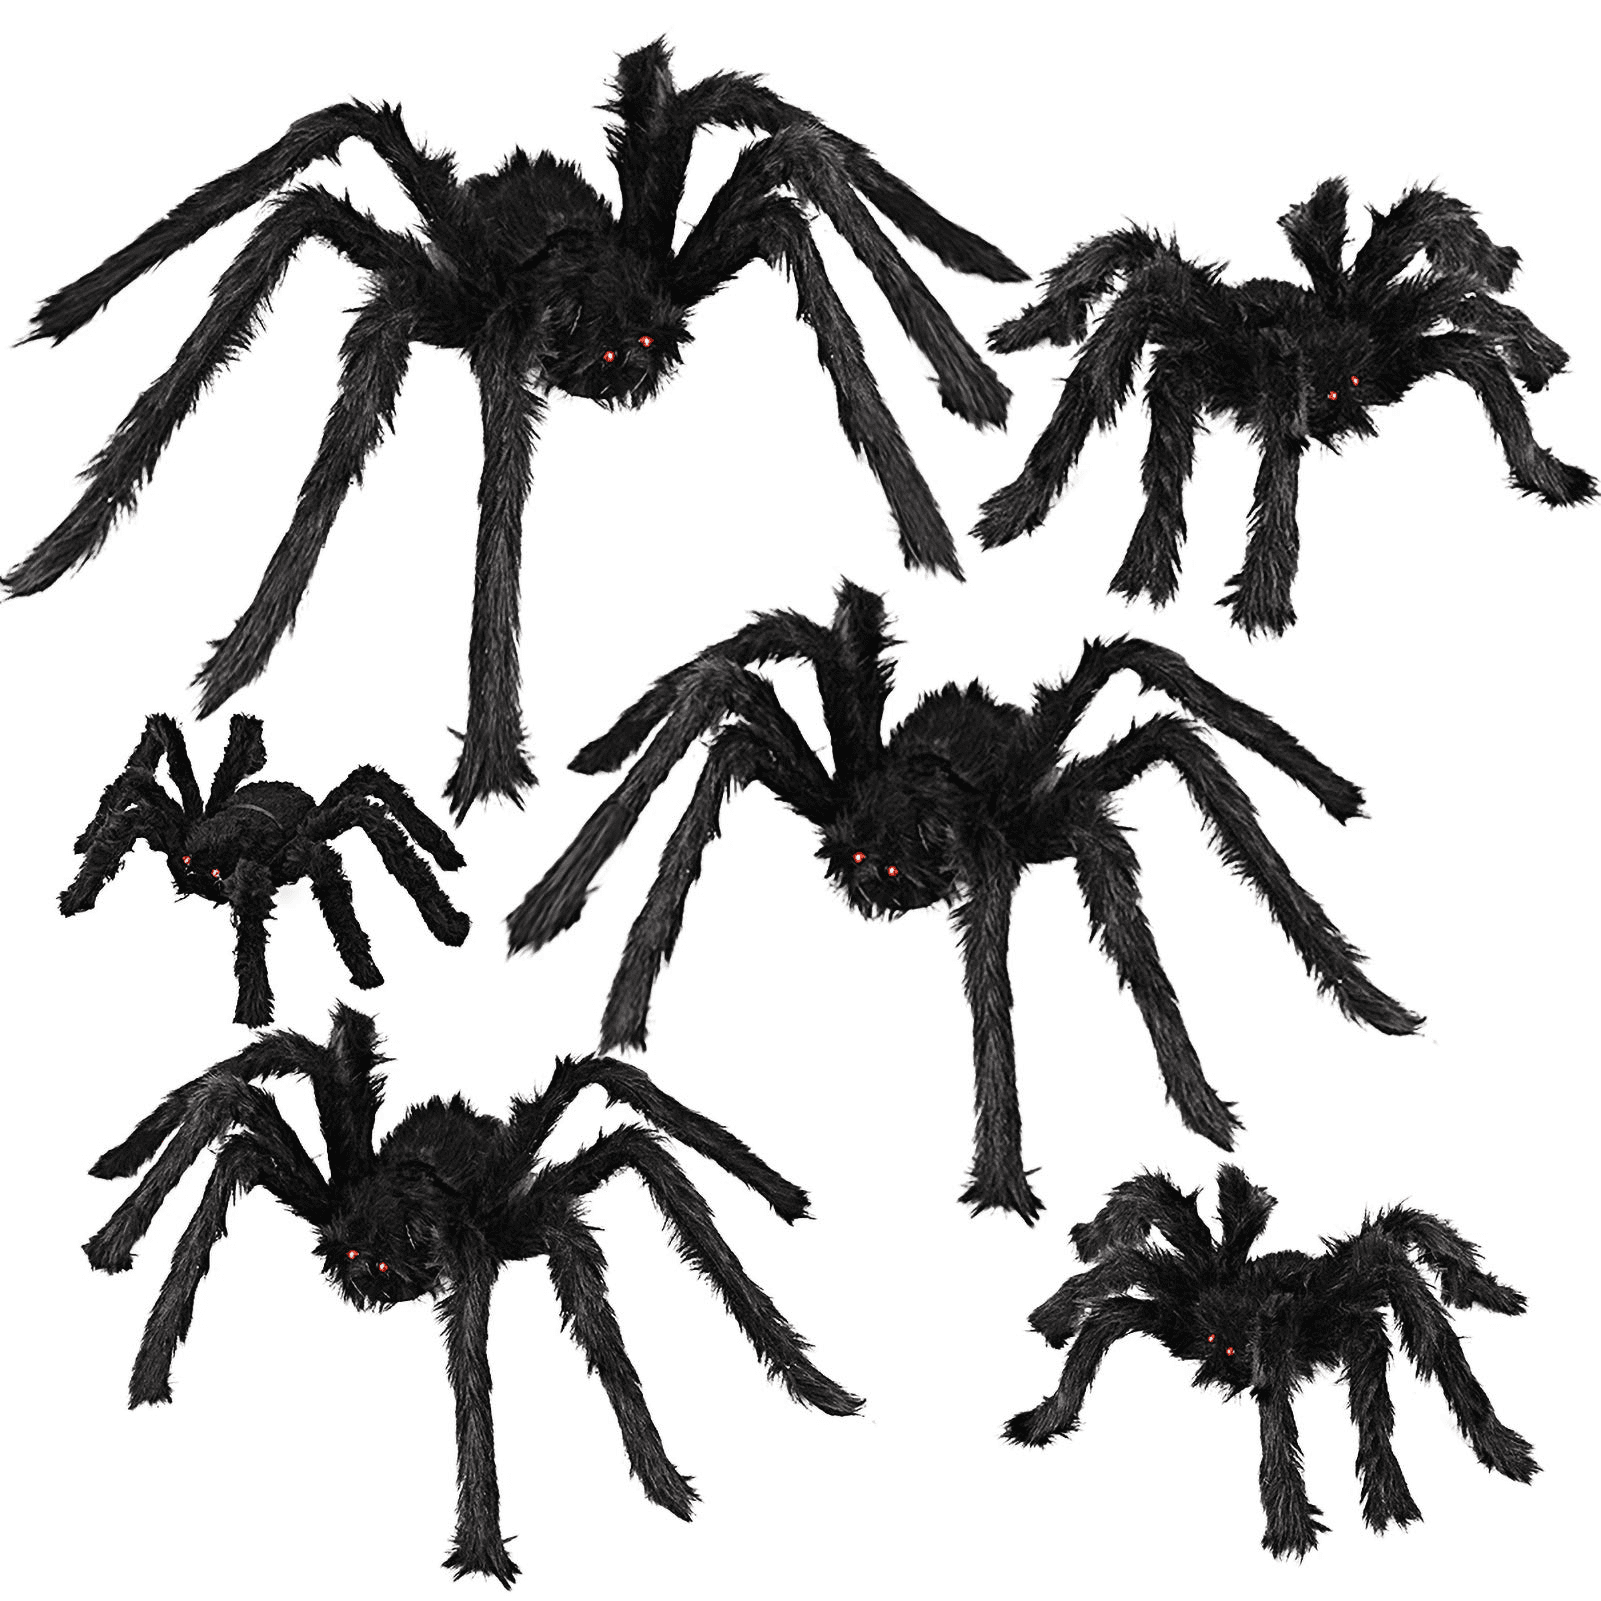 Halloween Realistic Hairy Spiders Set 6 Pack Halloween Spider Props